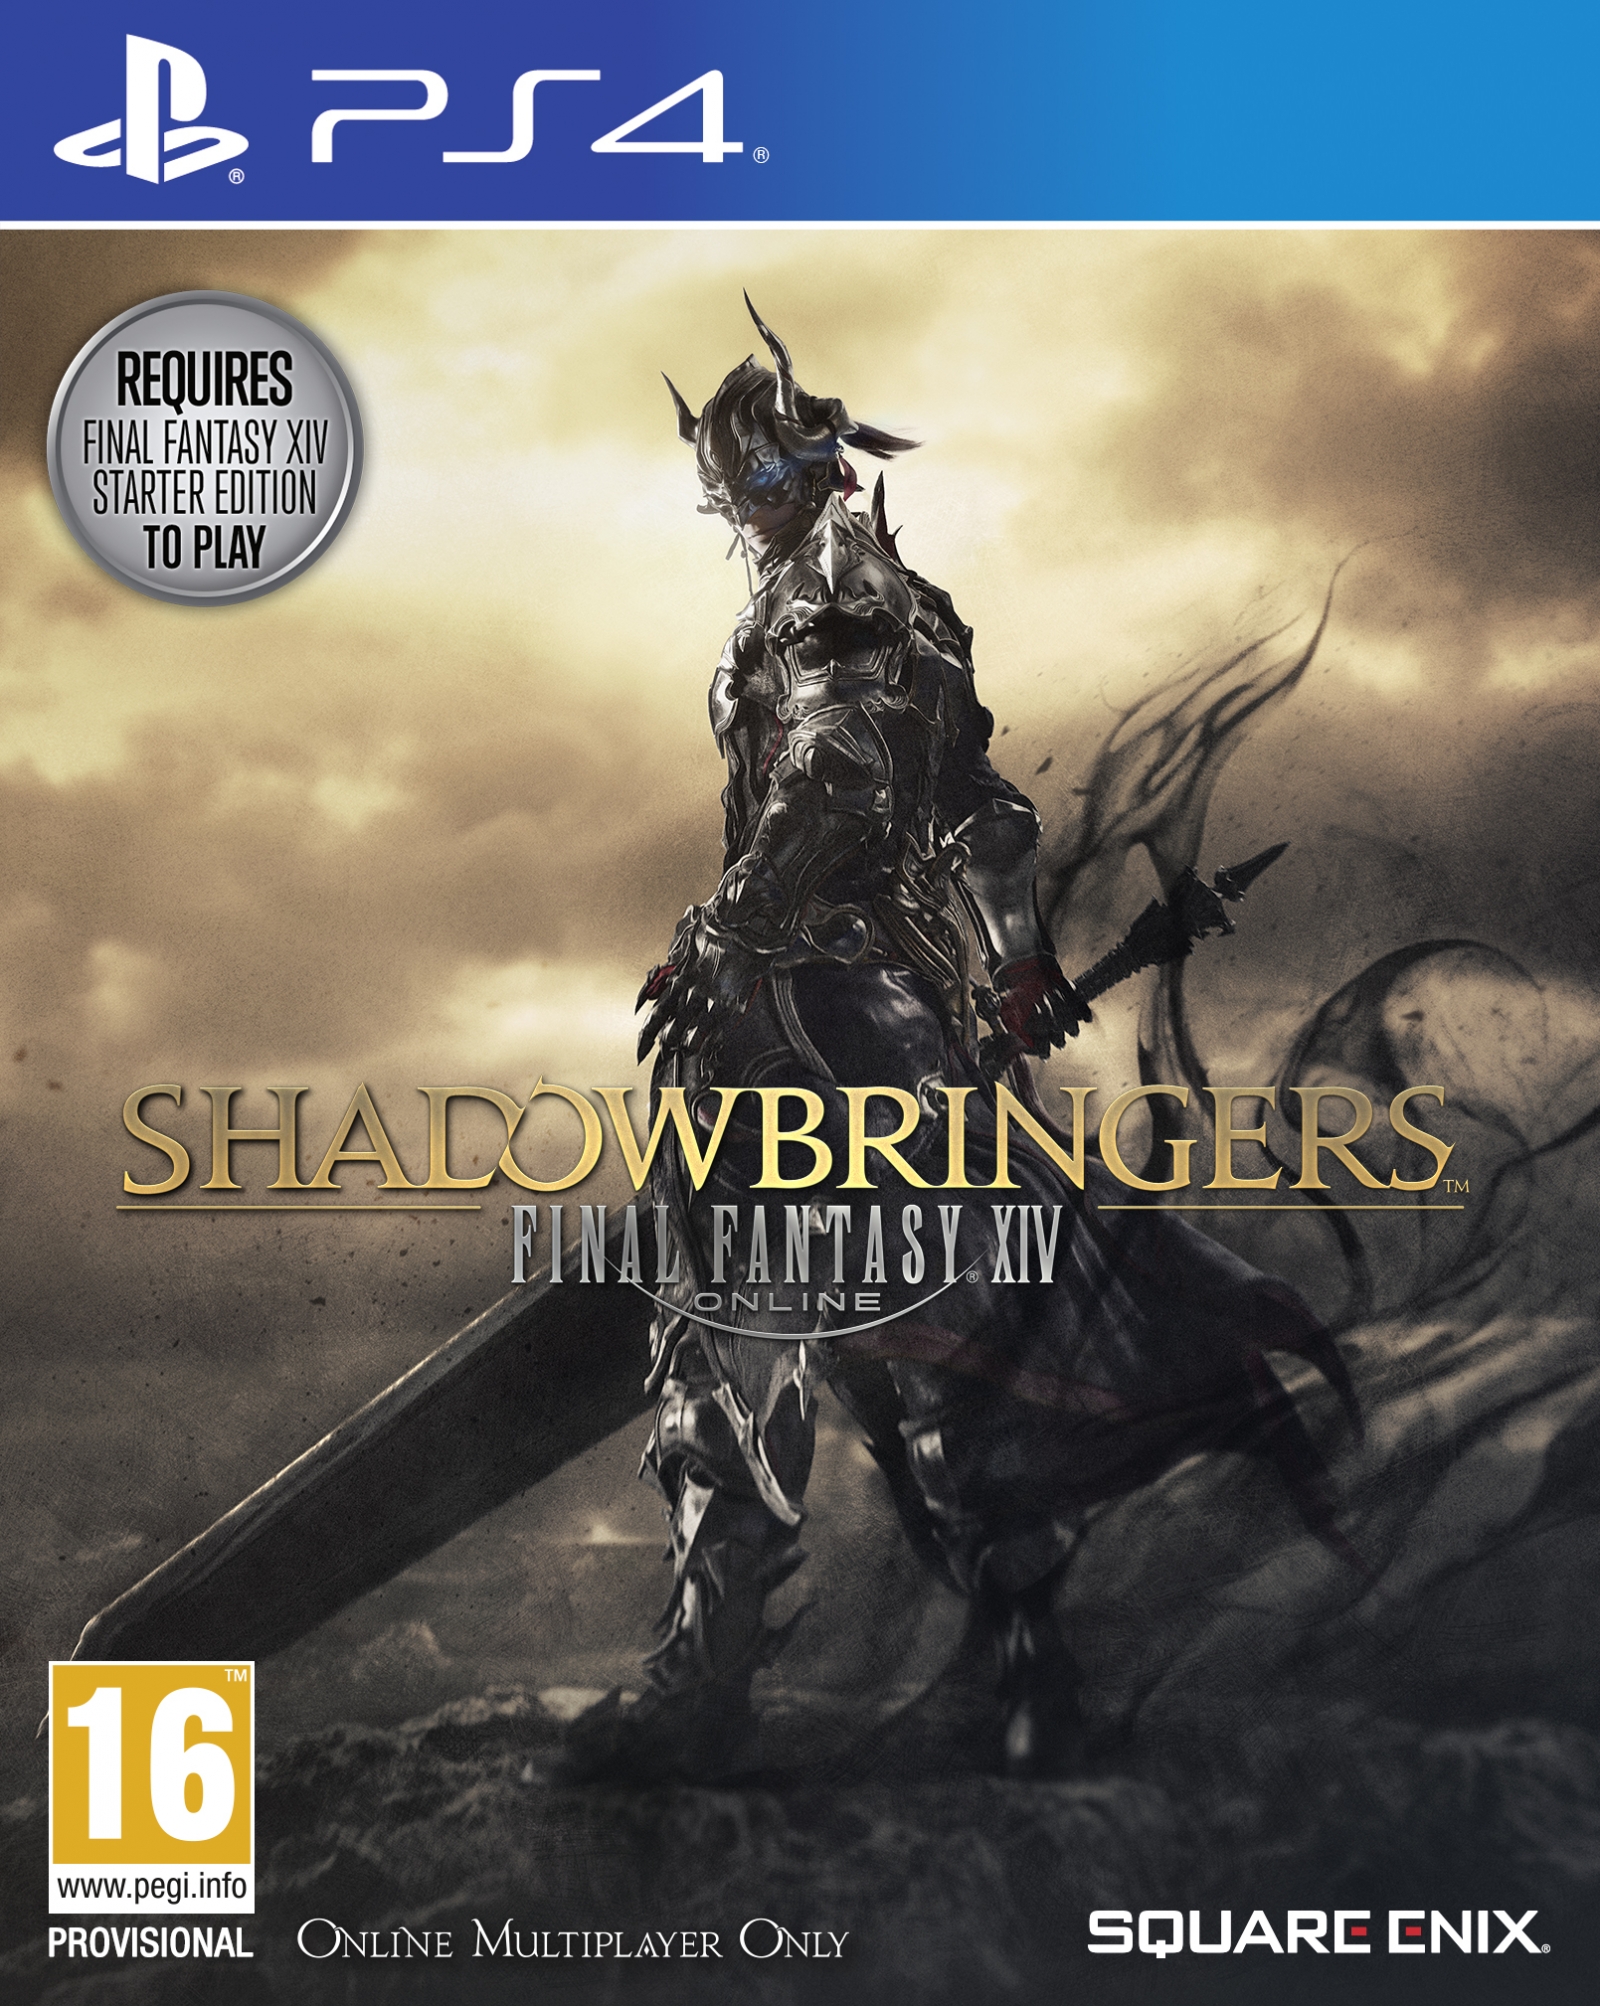 PS4 Final Fantasy XIV: Shadowbringers